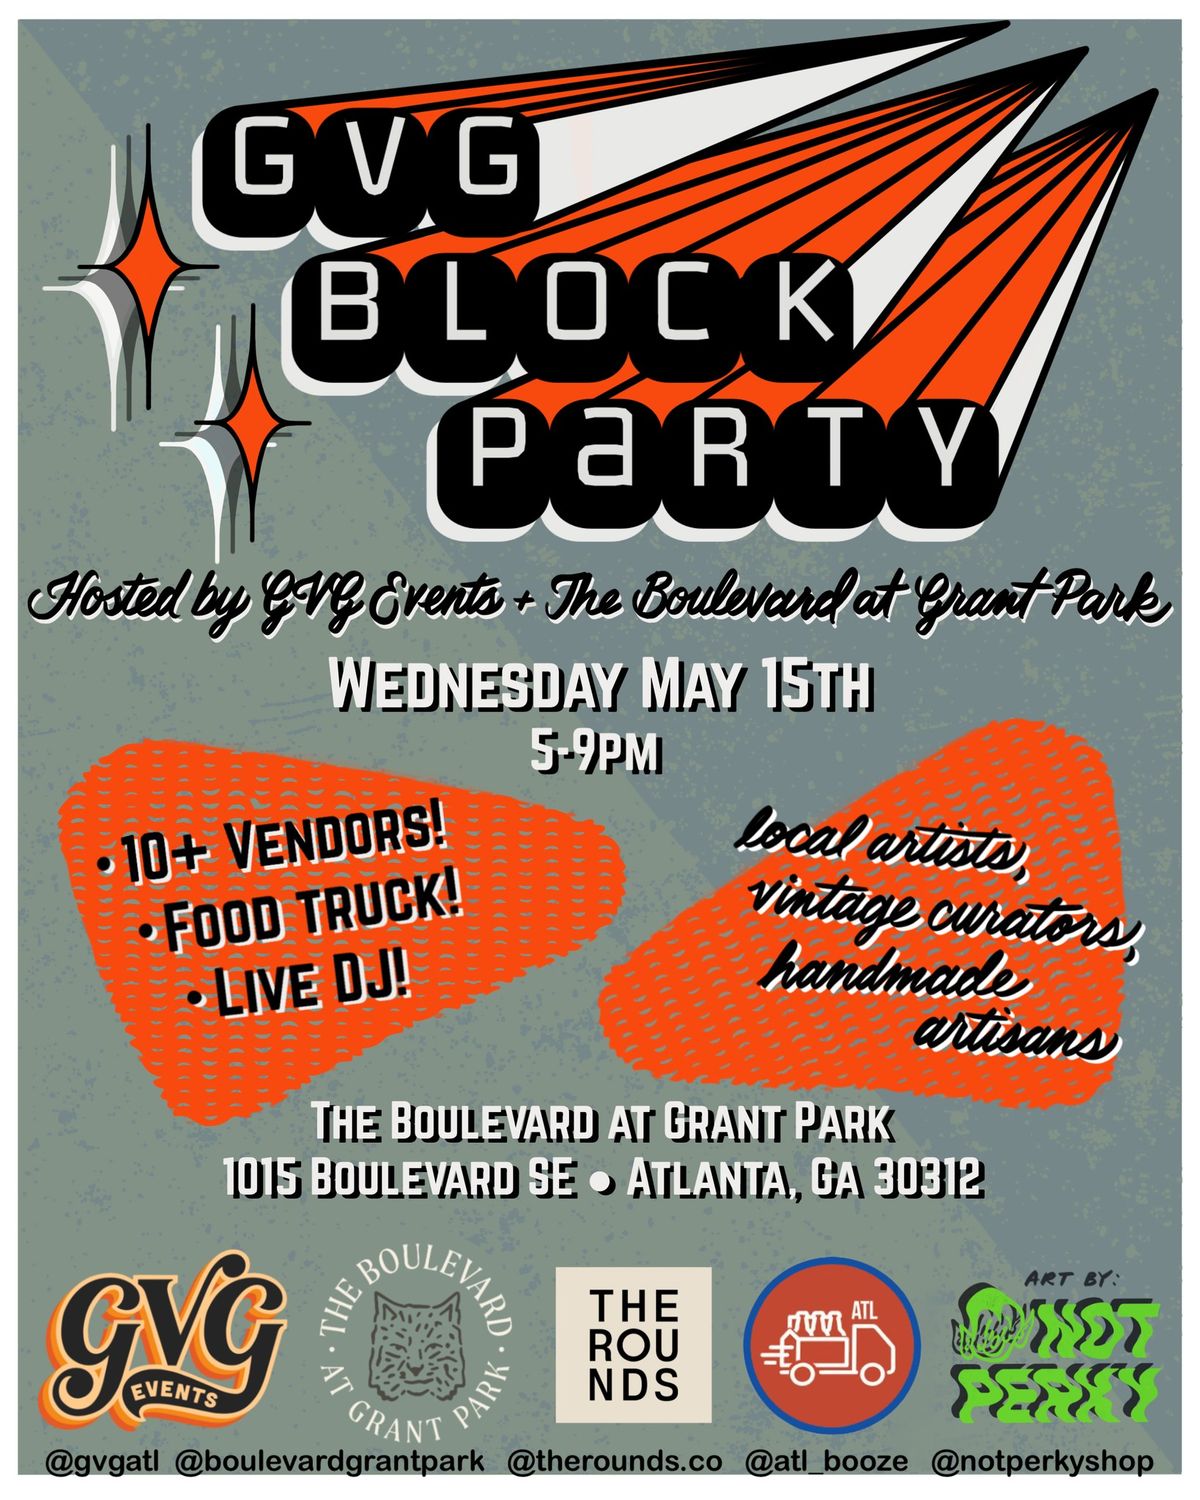 GVG Block Party at The Boulevard at Grant Park!